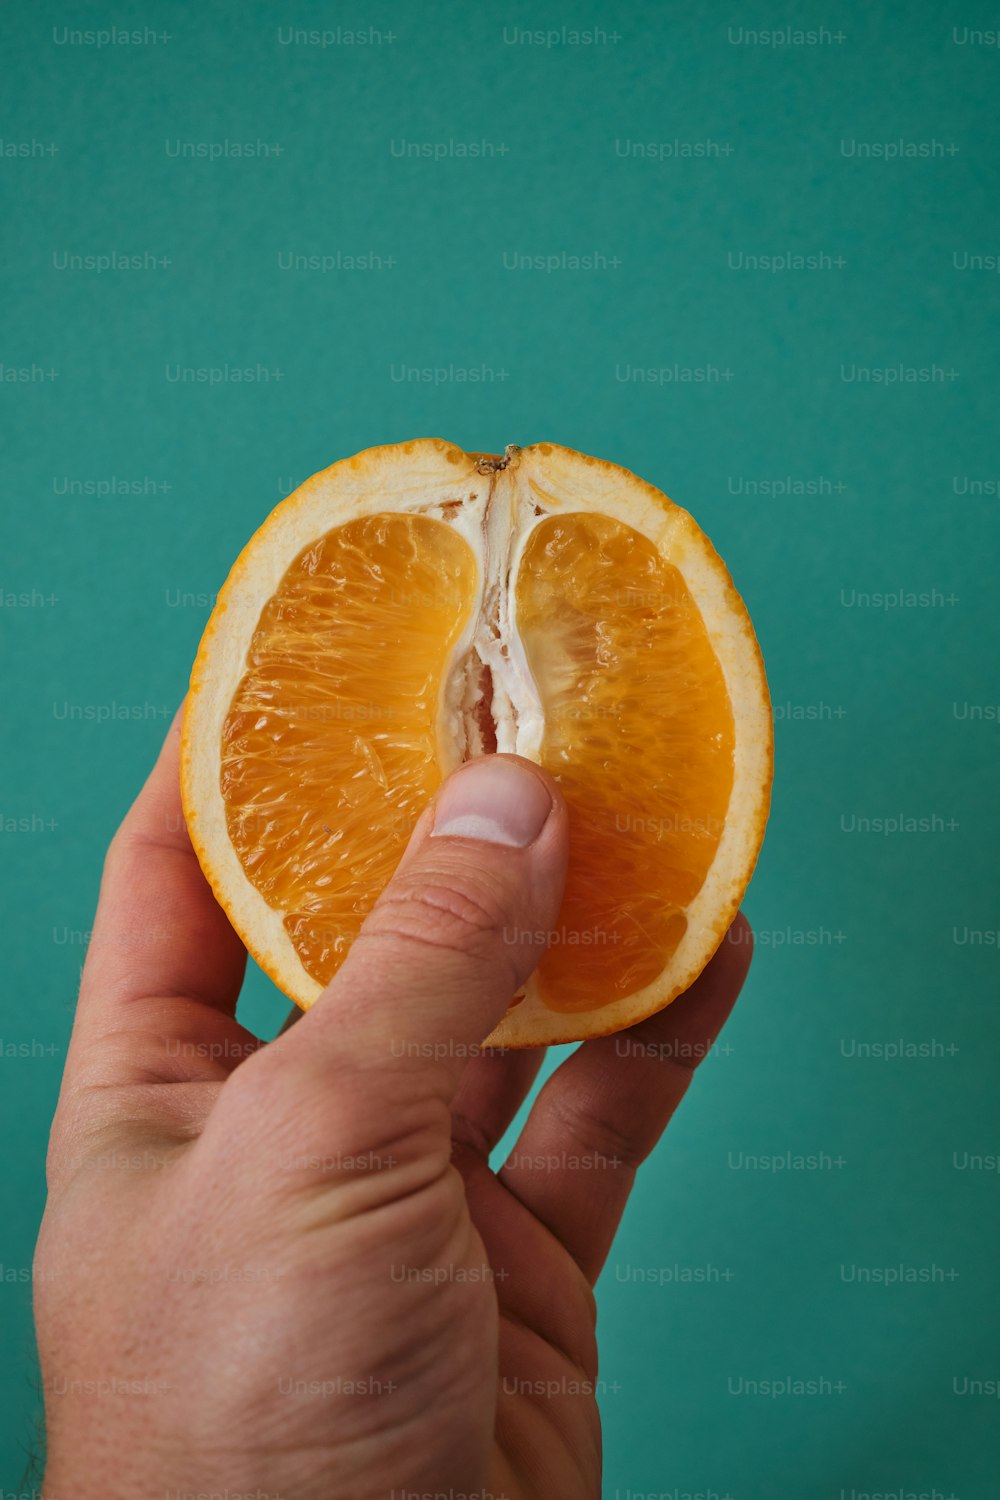 a hand holding a half of an orange